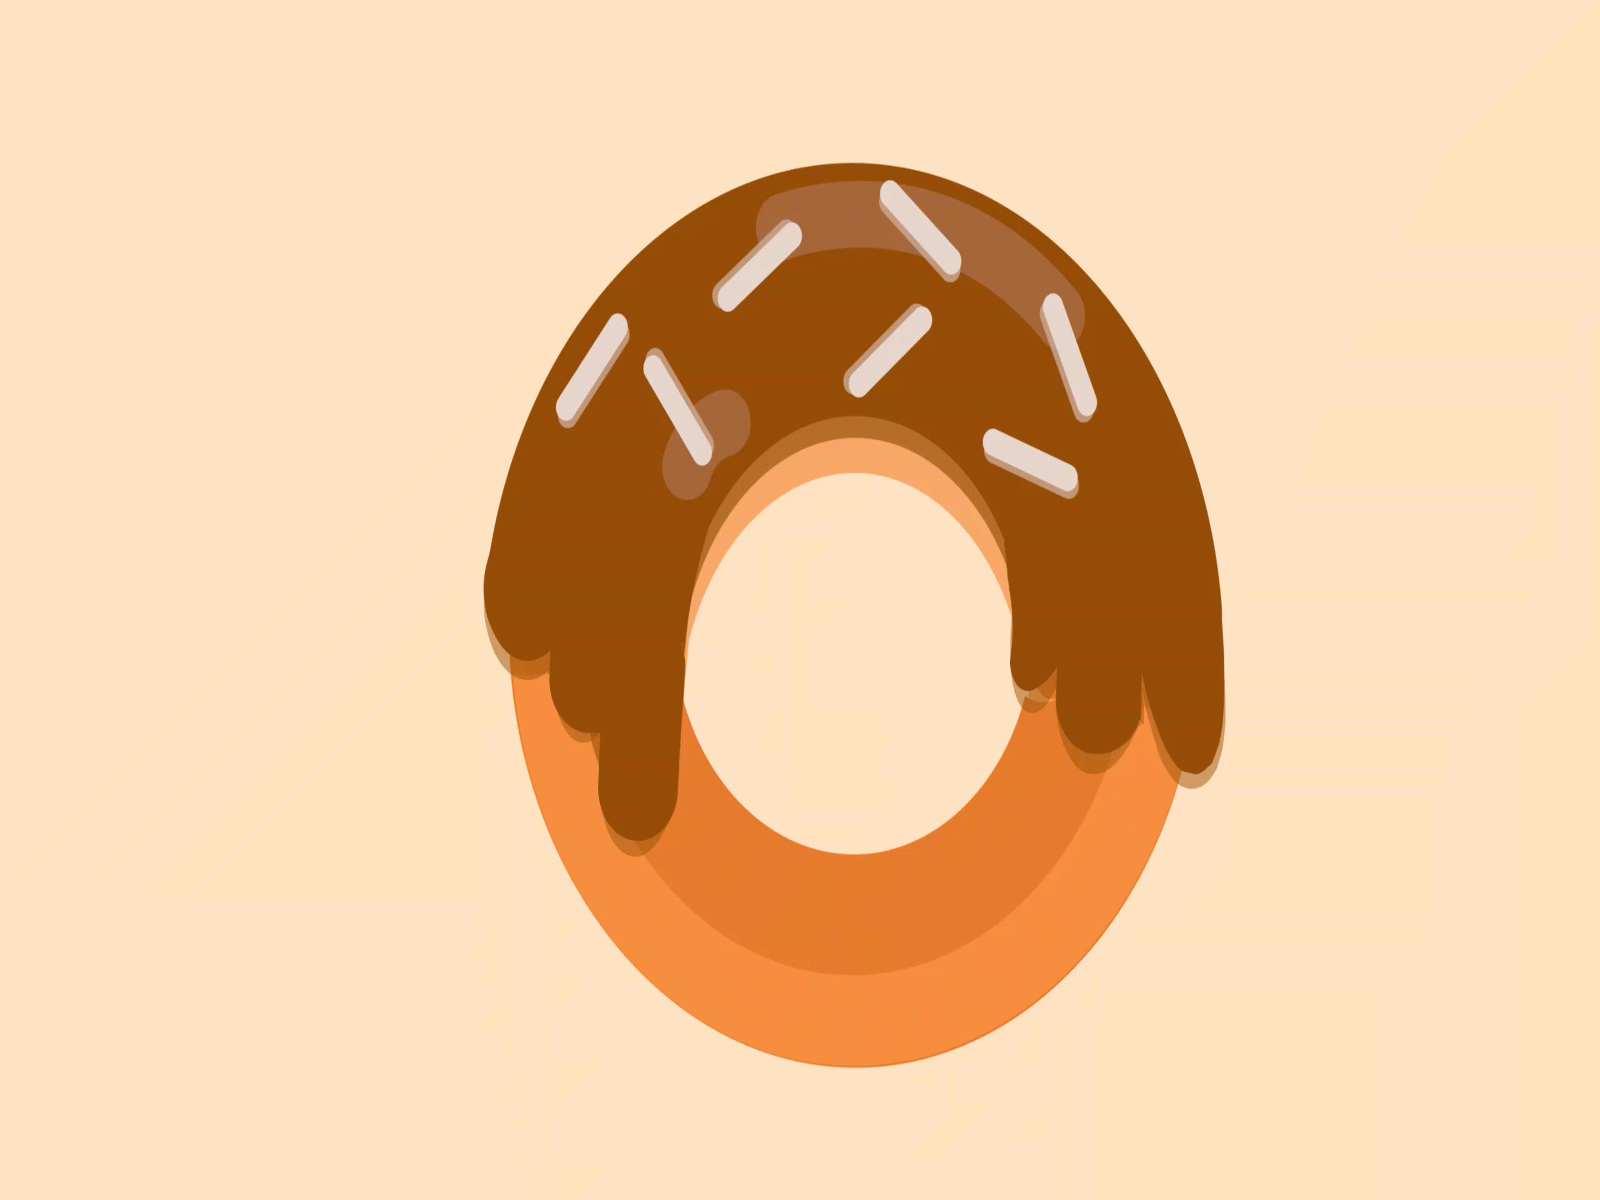 Donut chocolate